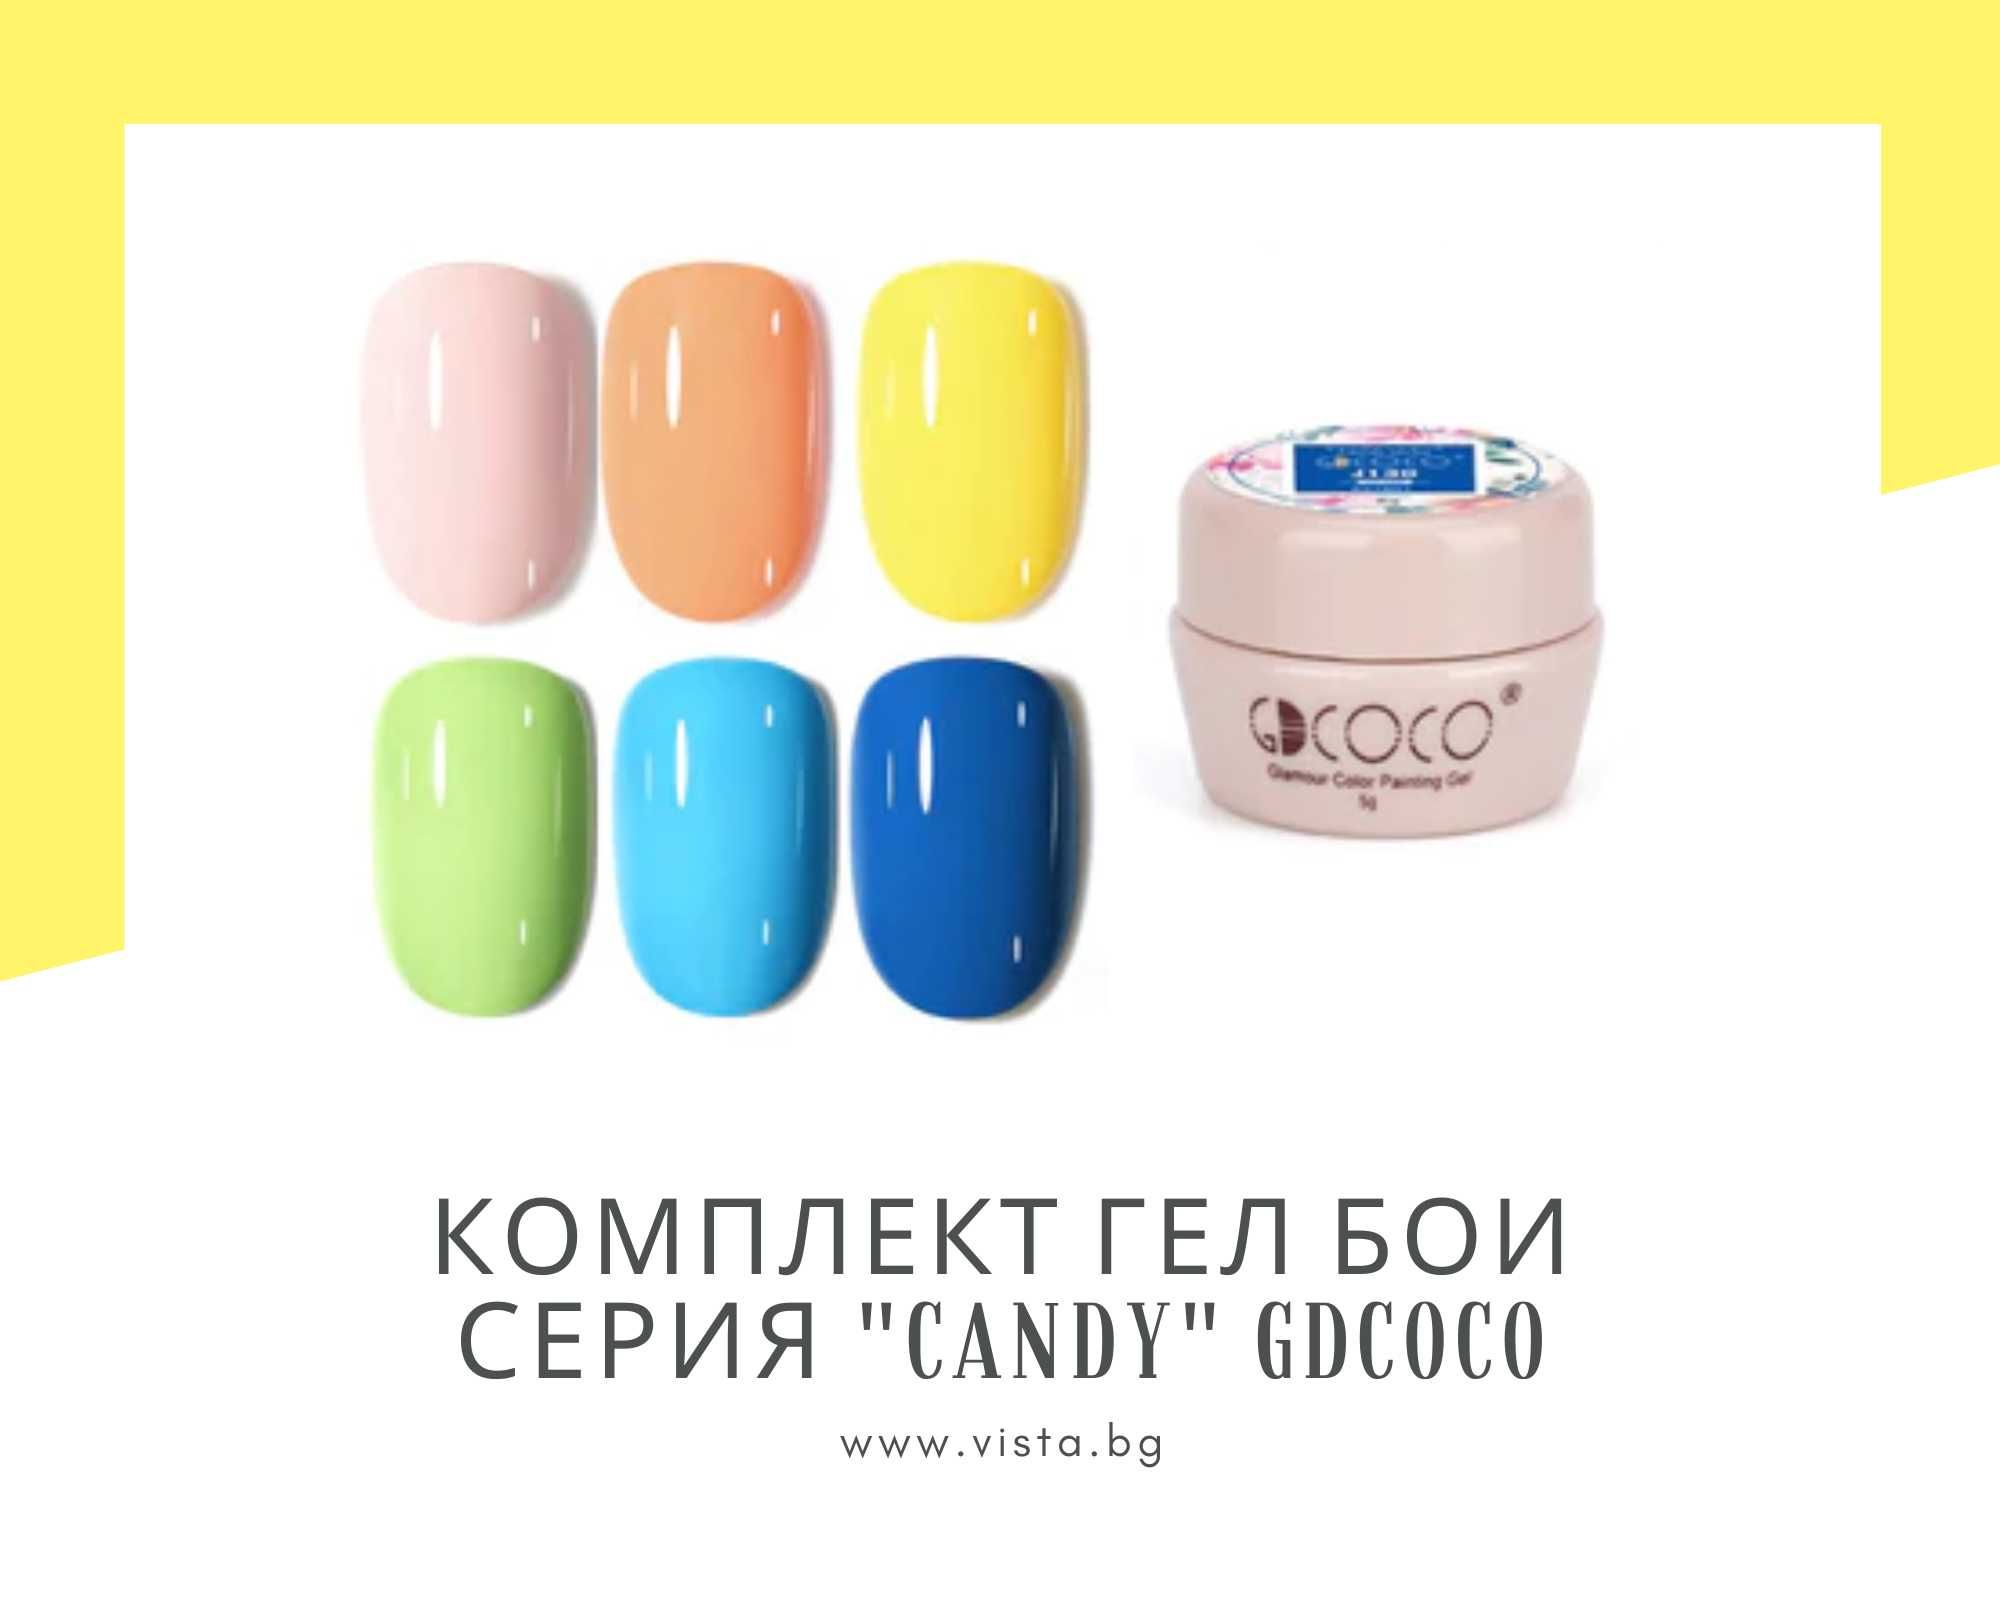 Комплект UV/LED бонбонени гел бои серия "Candy" GDCOCO – 6 броя